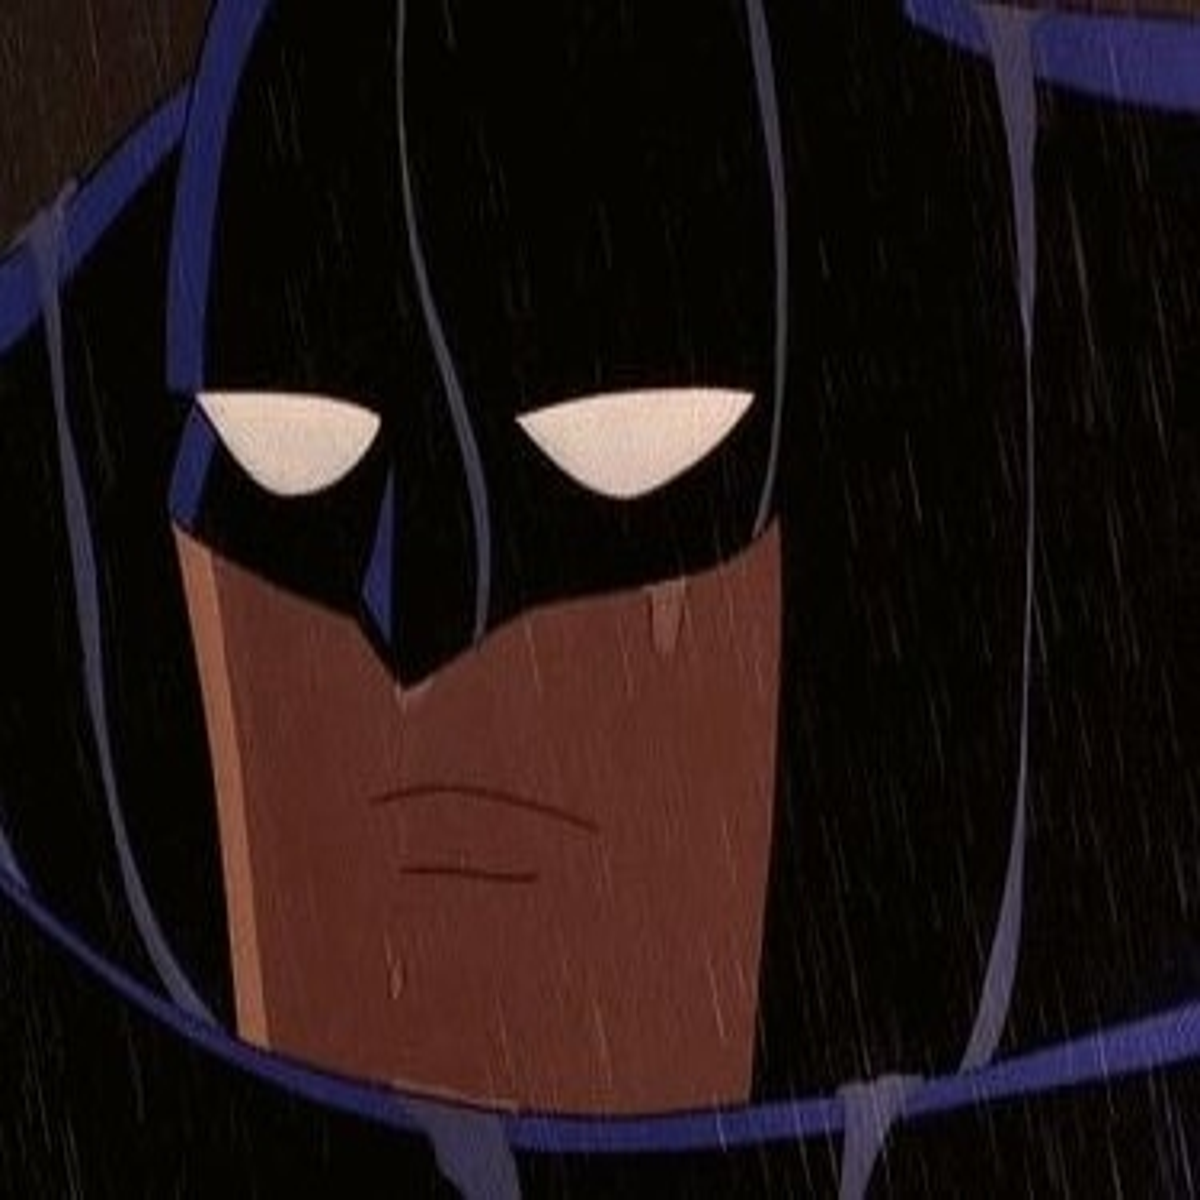 Batman: Arkham Knight is broken on PC